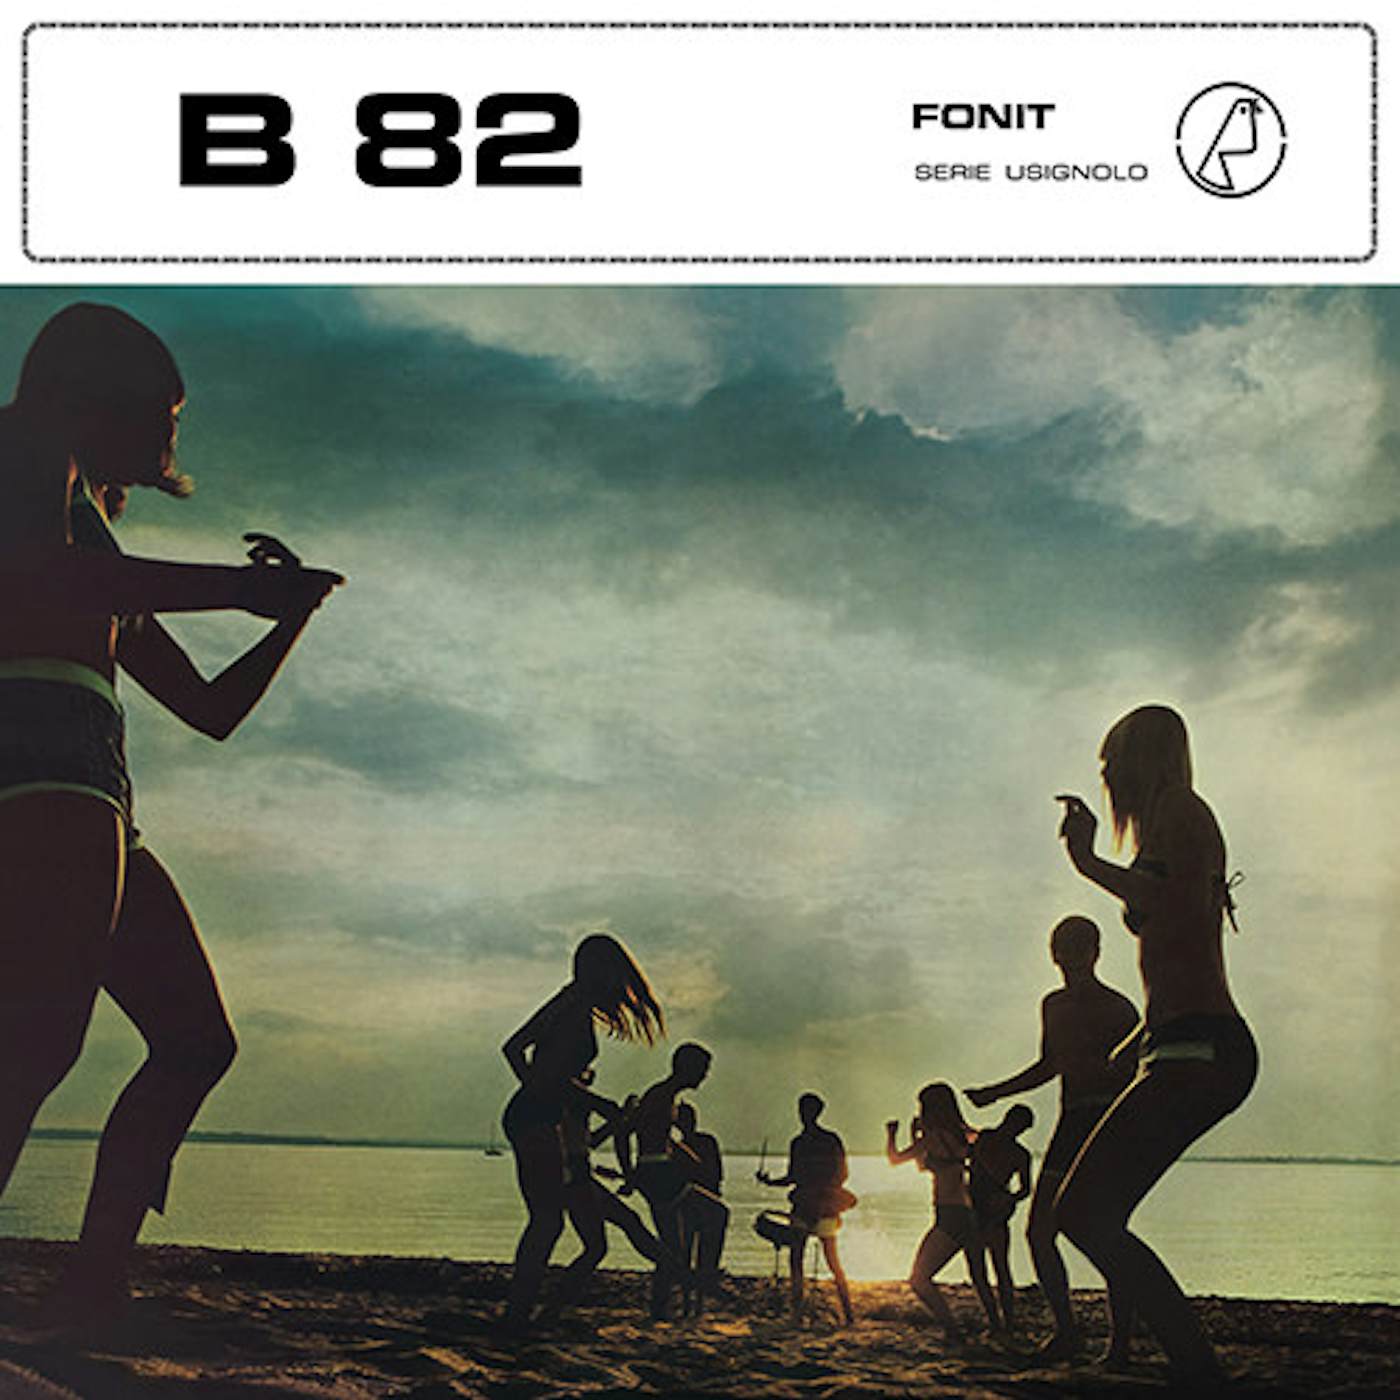 Fabio Fabor B82 - BALLABILI ANNI '70 (UNDERGROUND) - Original Soundtrack Vinyl Record